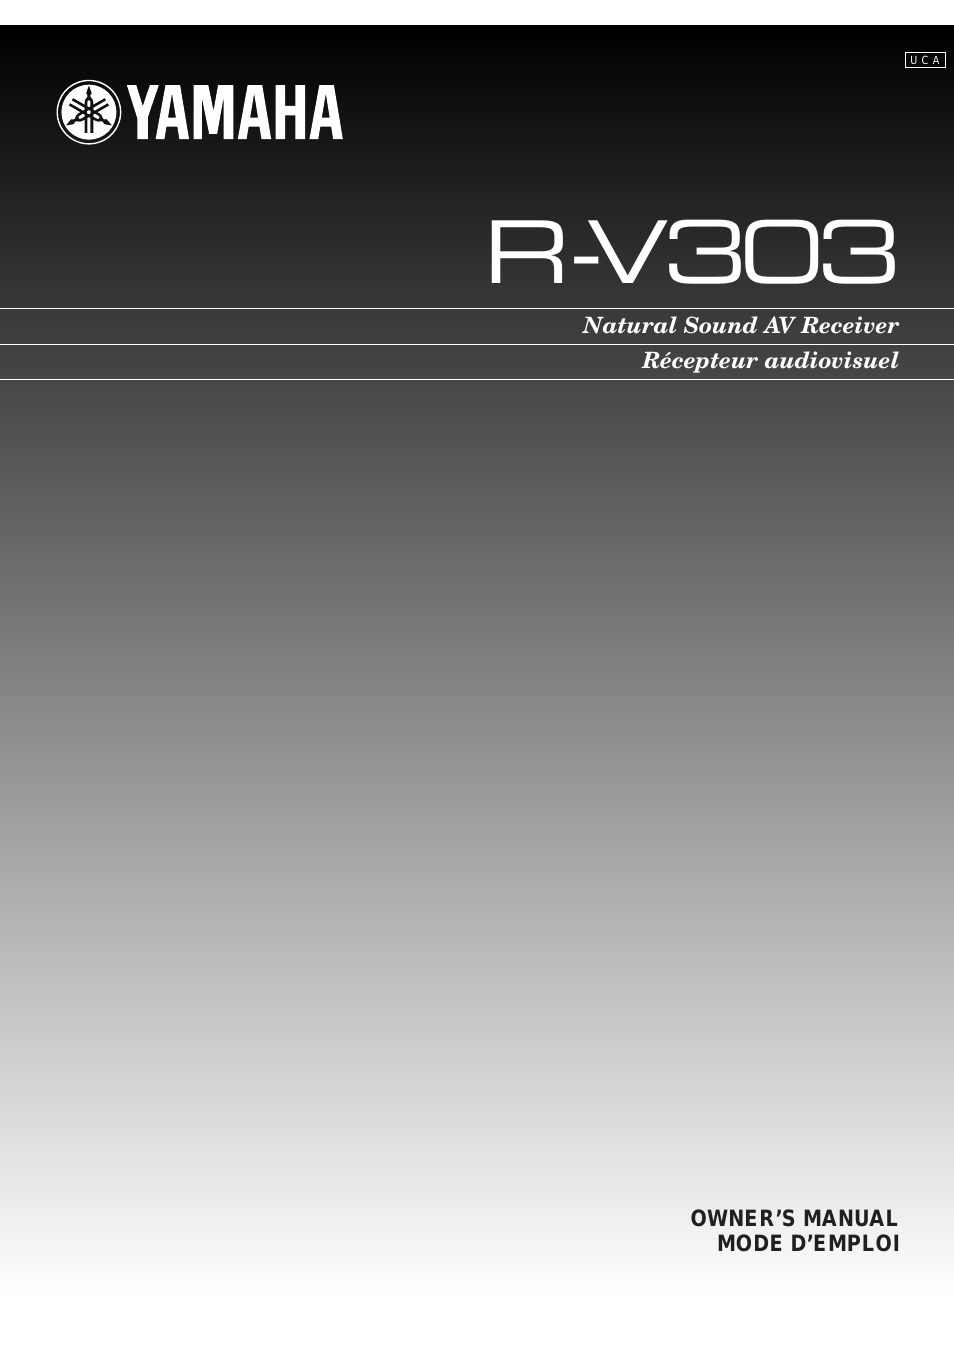 R-V303